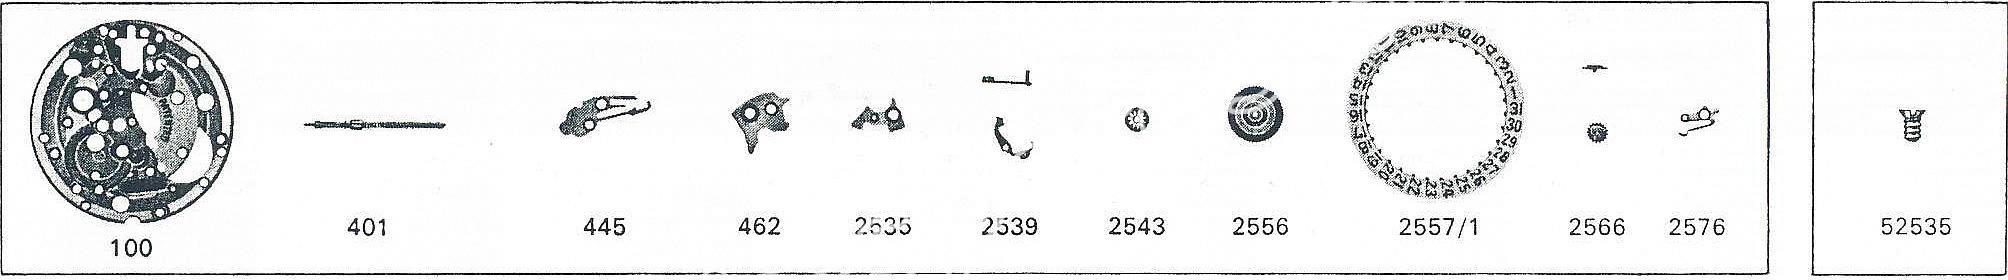 Enicar AR 771 watch date parts